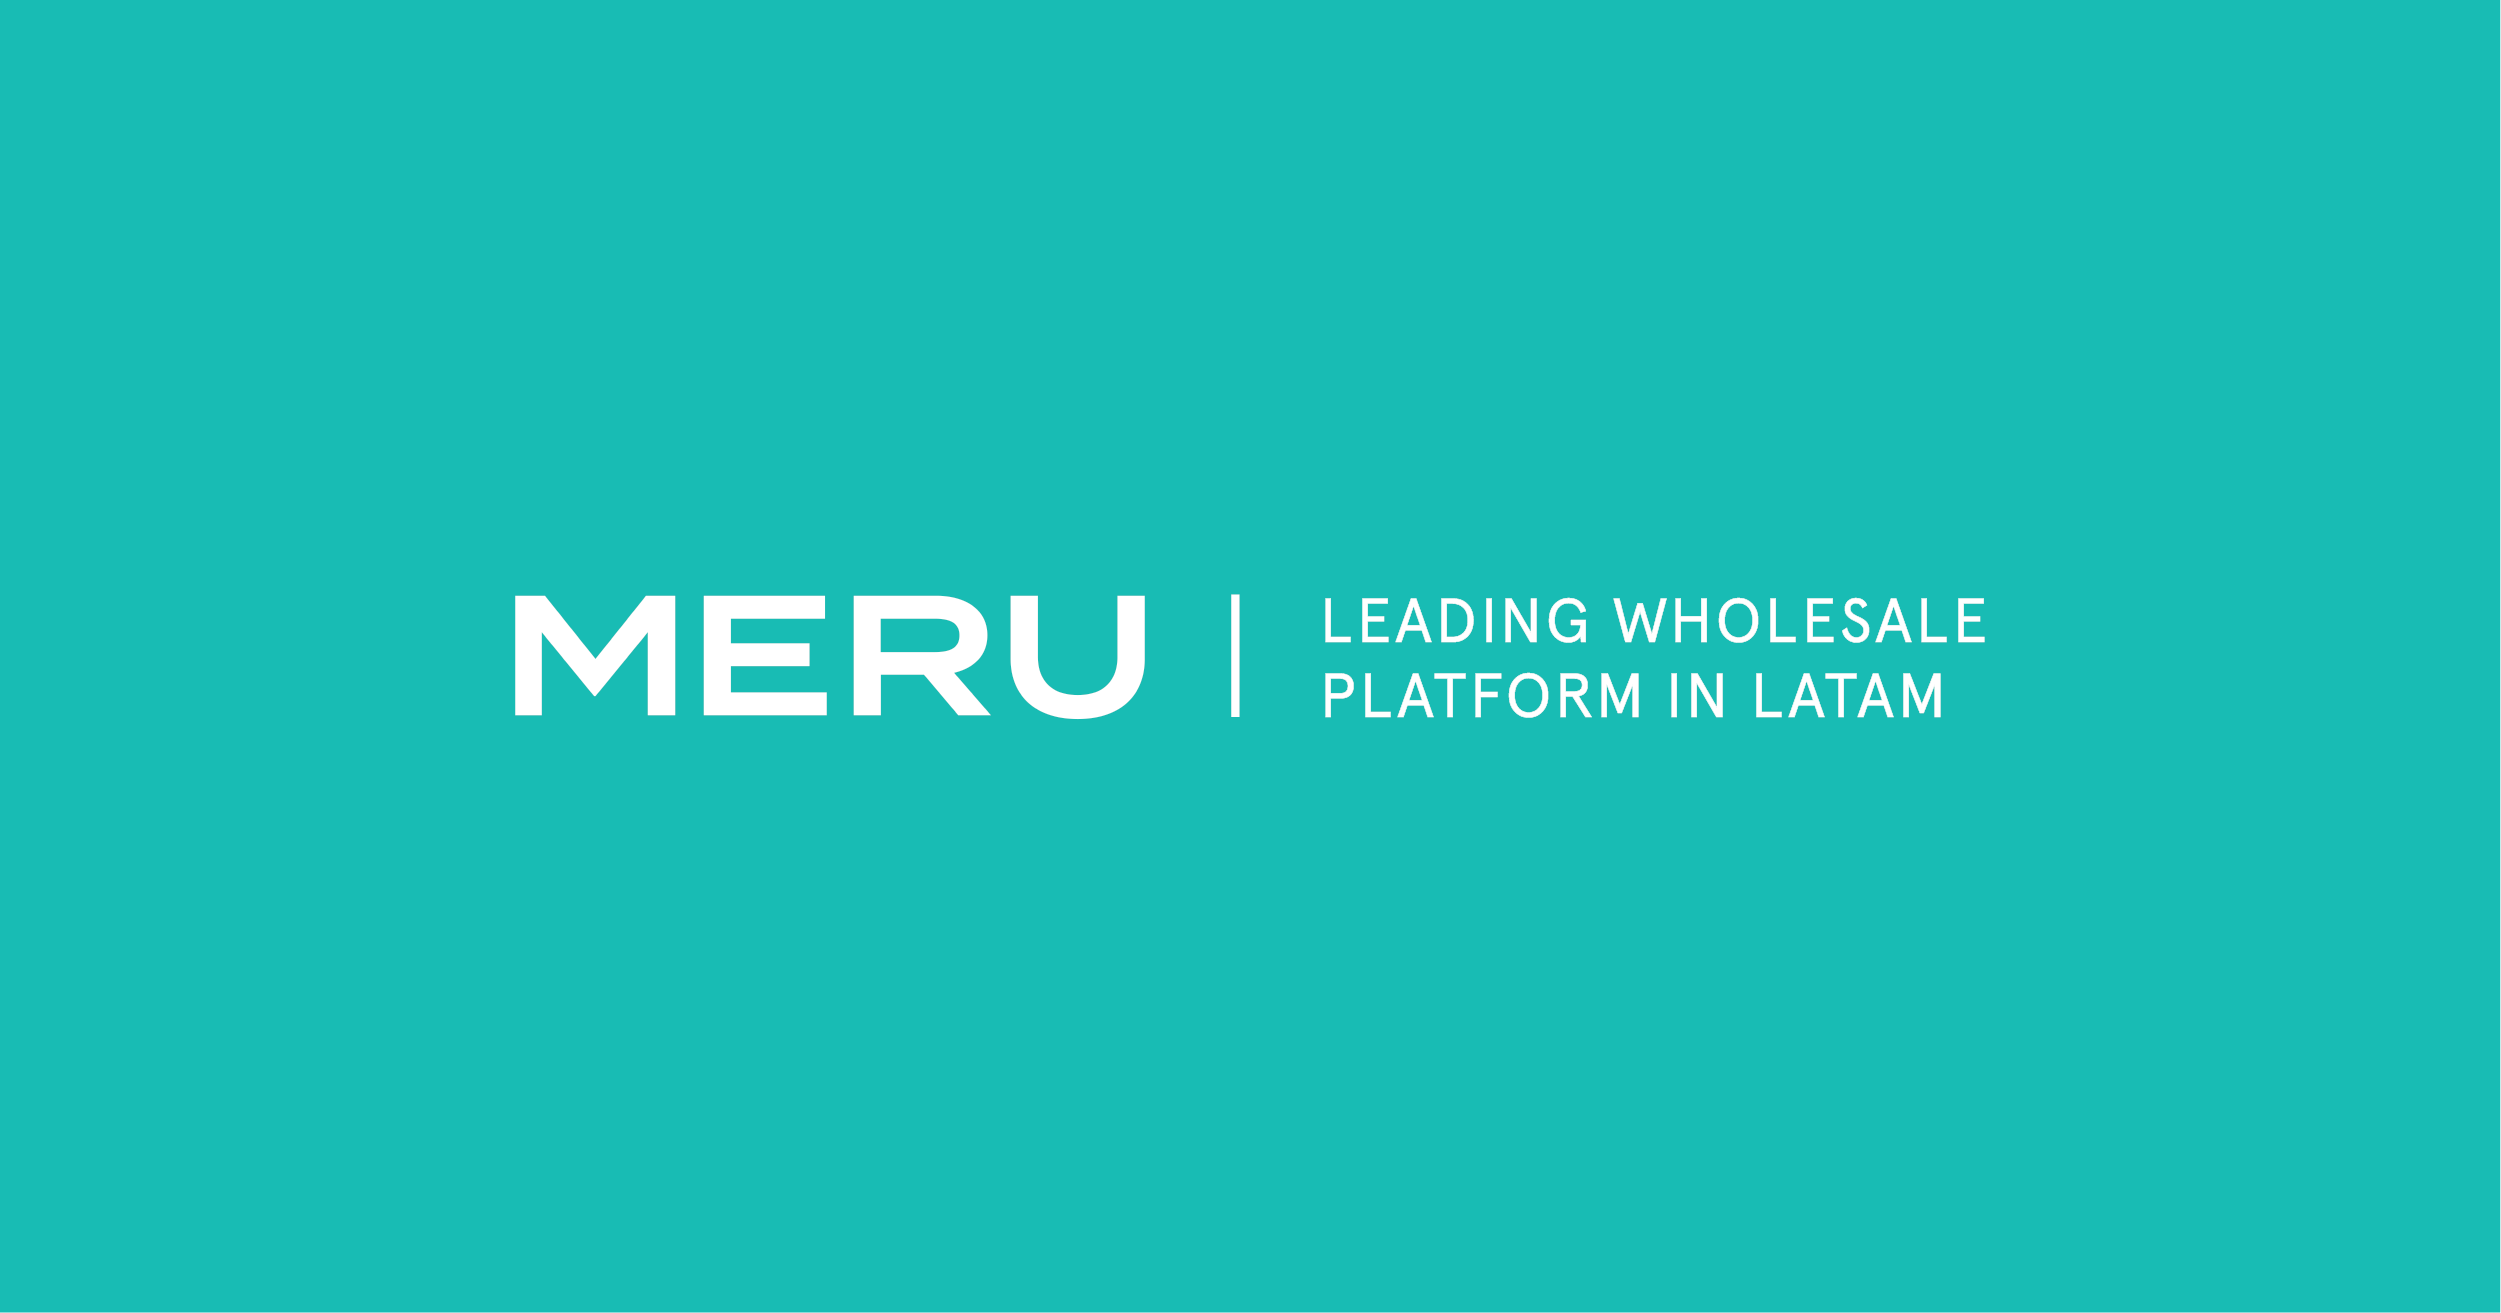 Meru.com receives US$15 million in investment